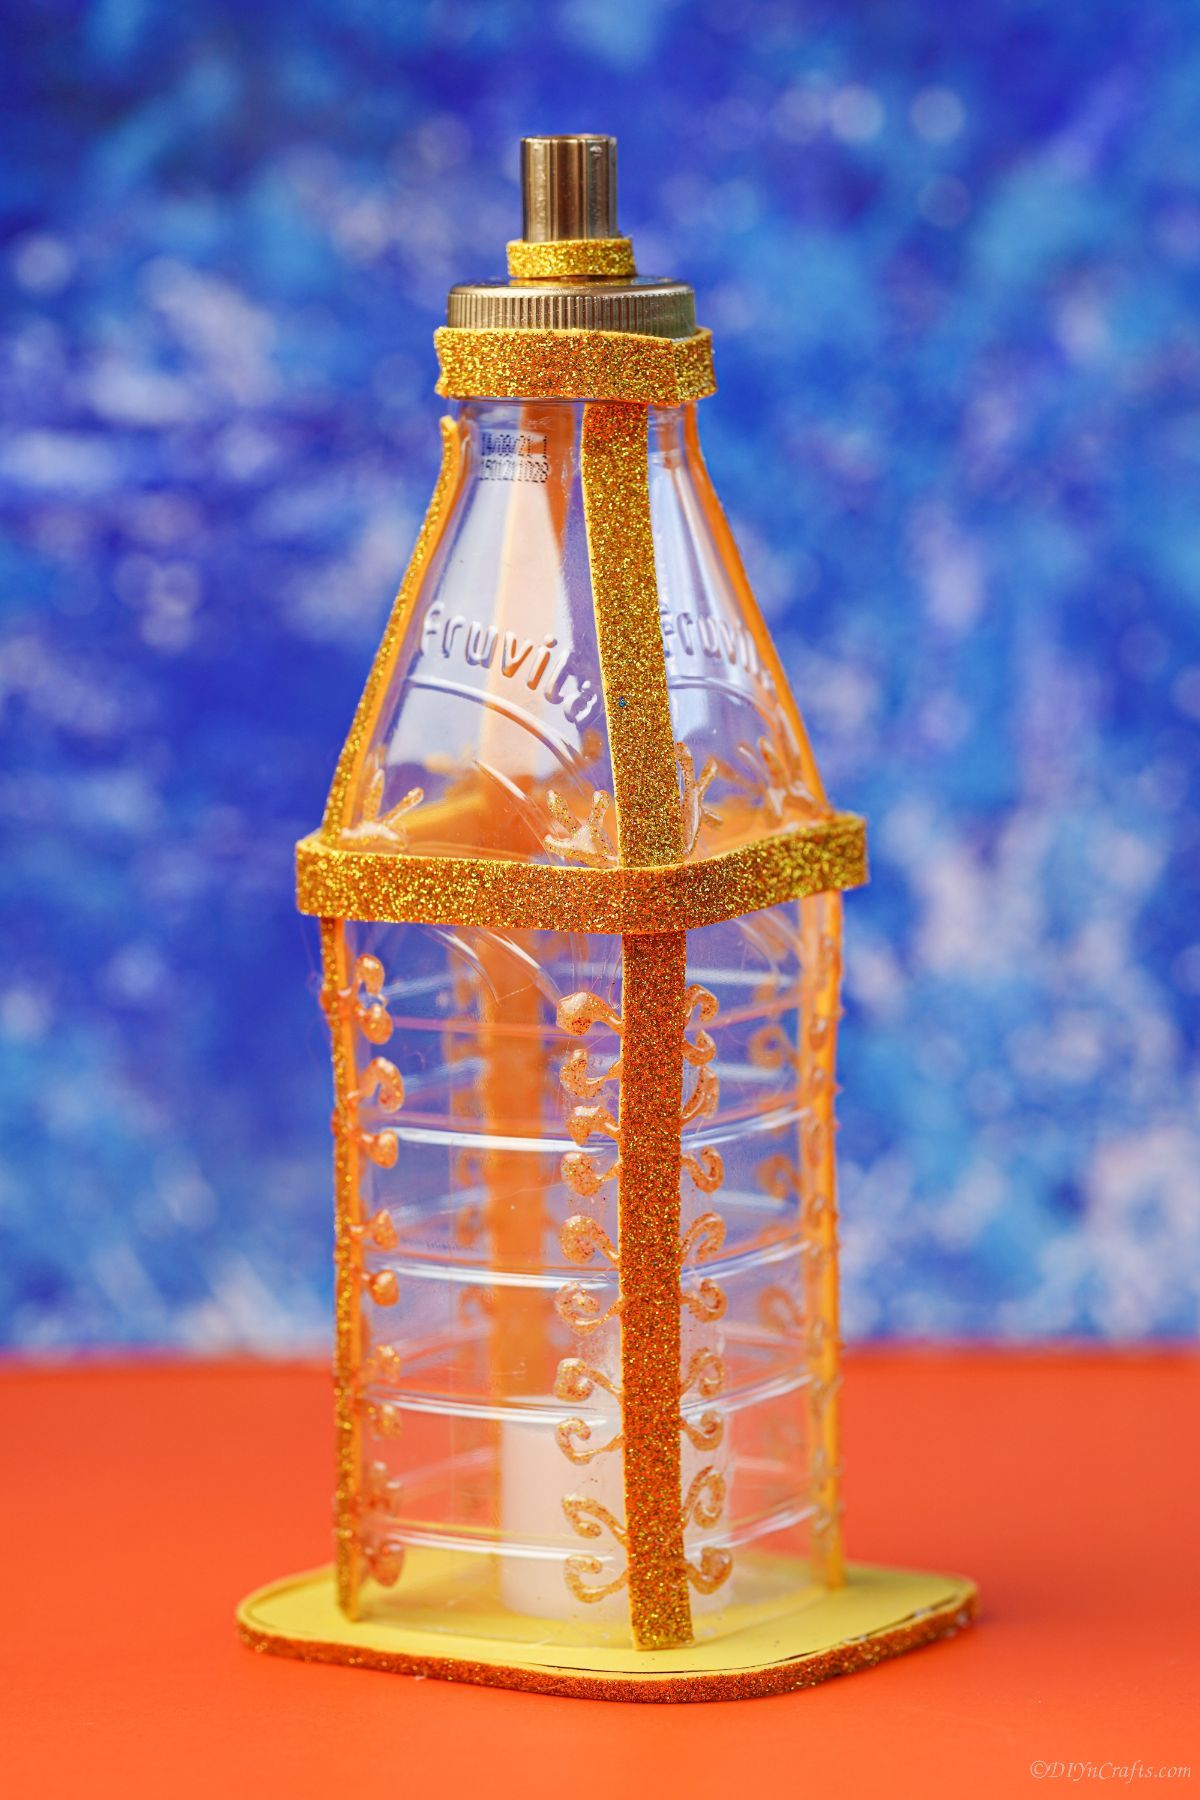 gold fake lantern on orange table with blue background